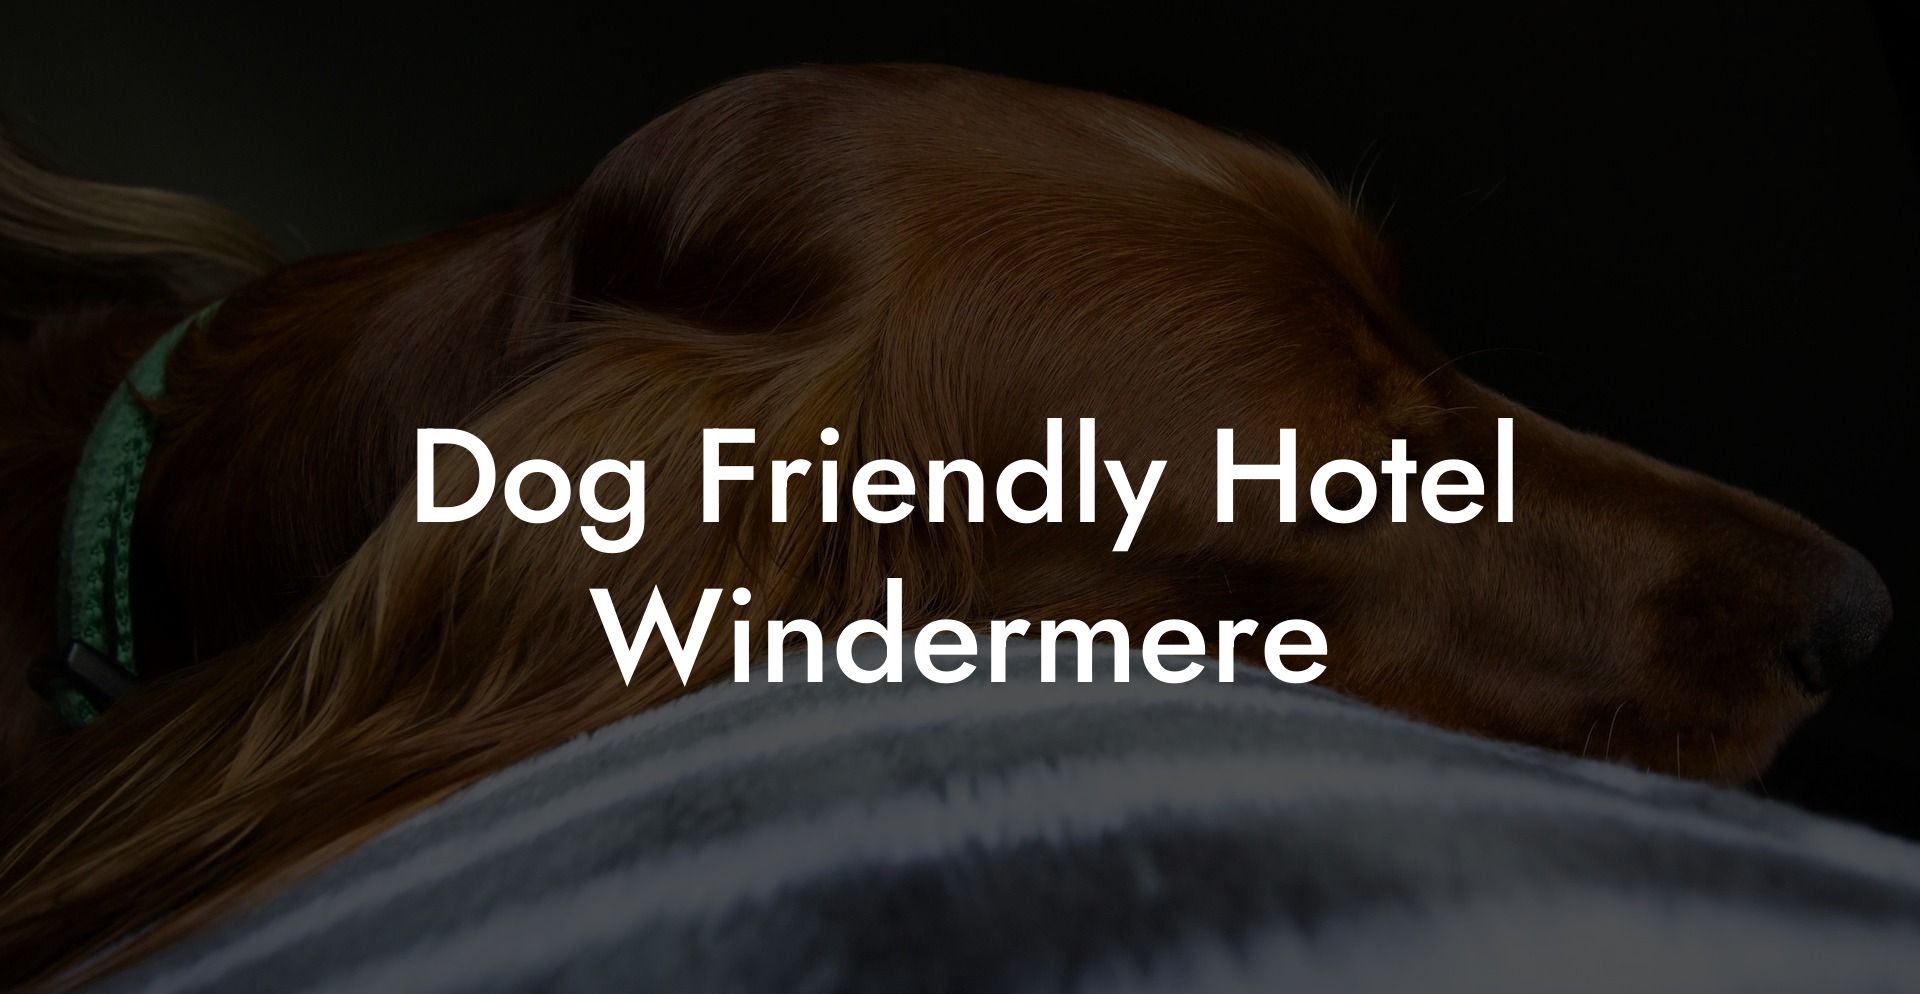 Dog Friendly Hotel Windermere